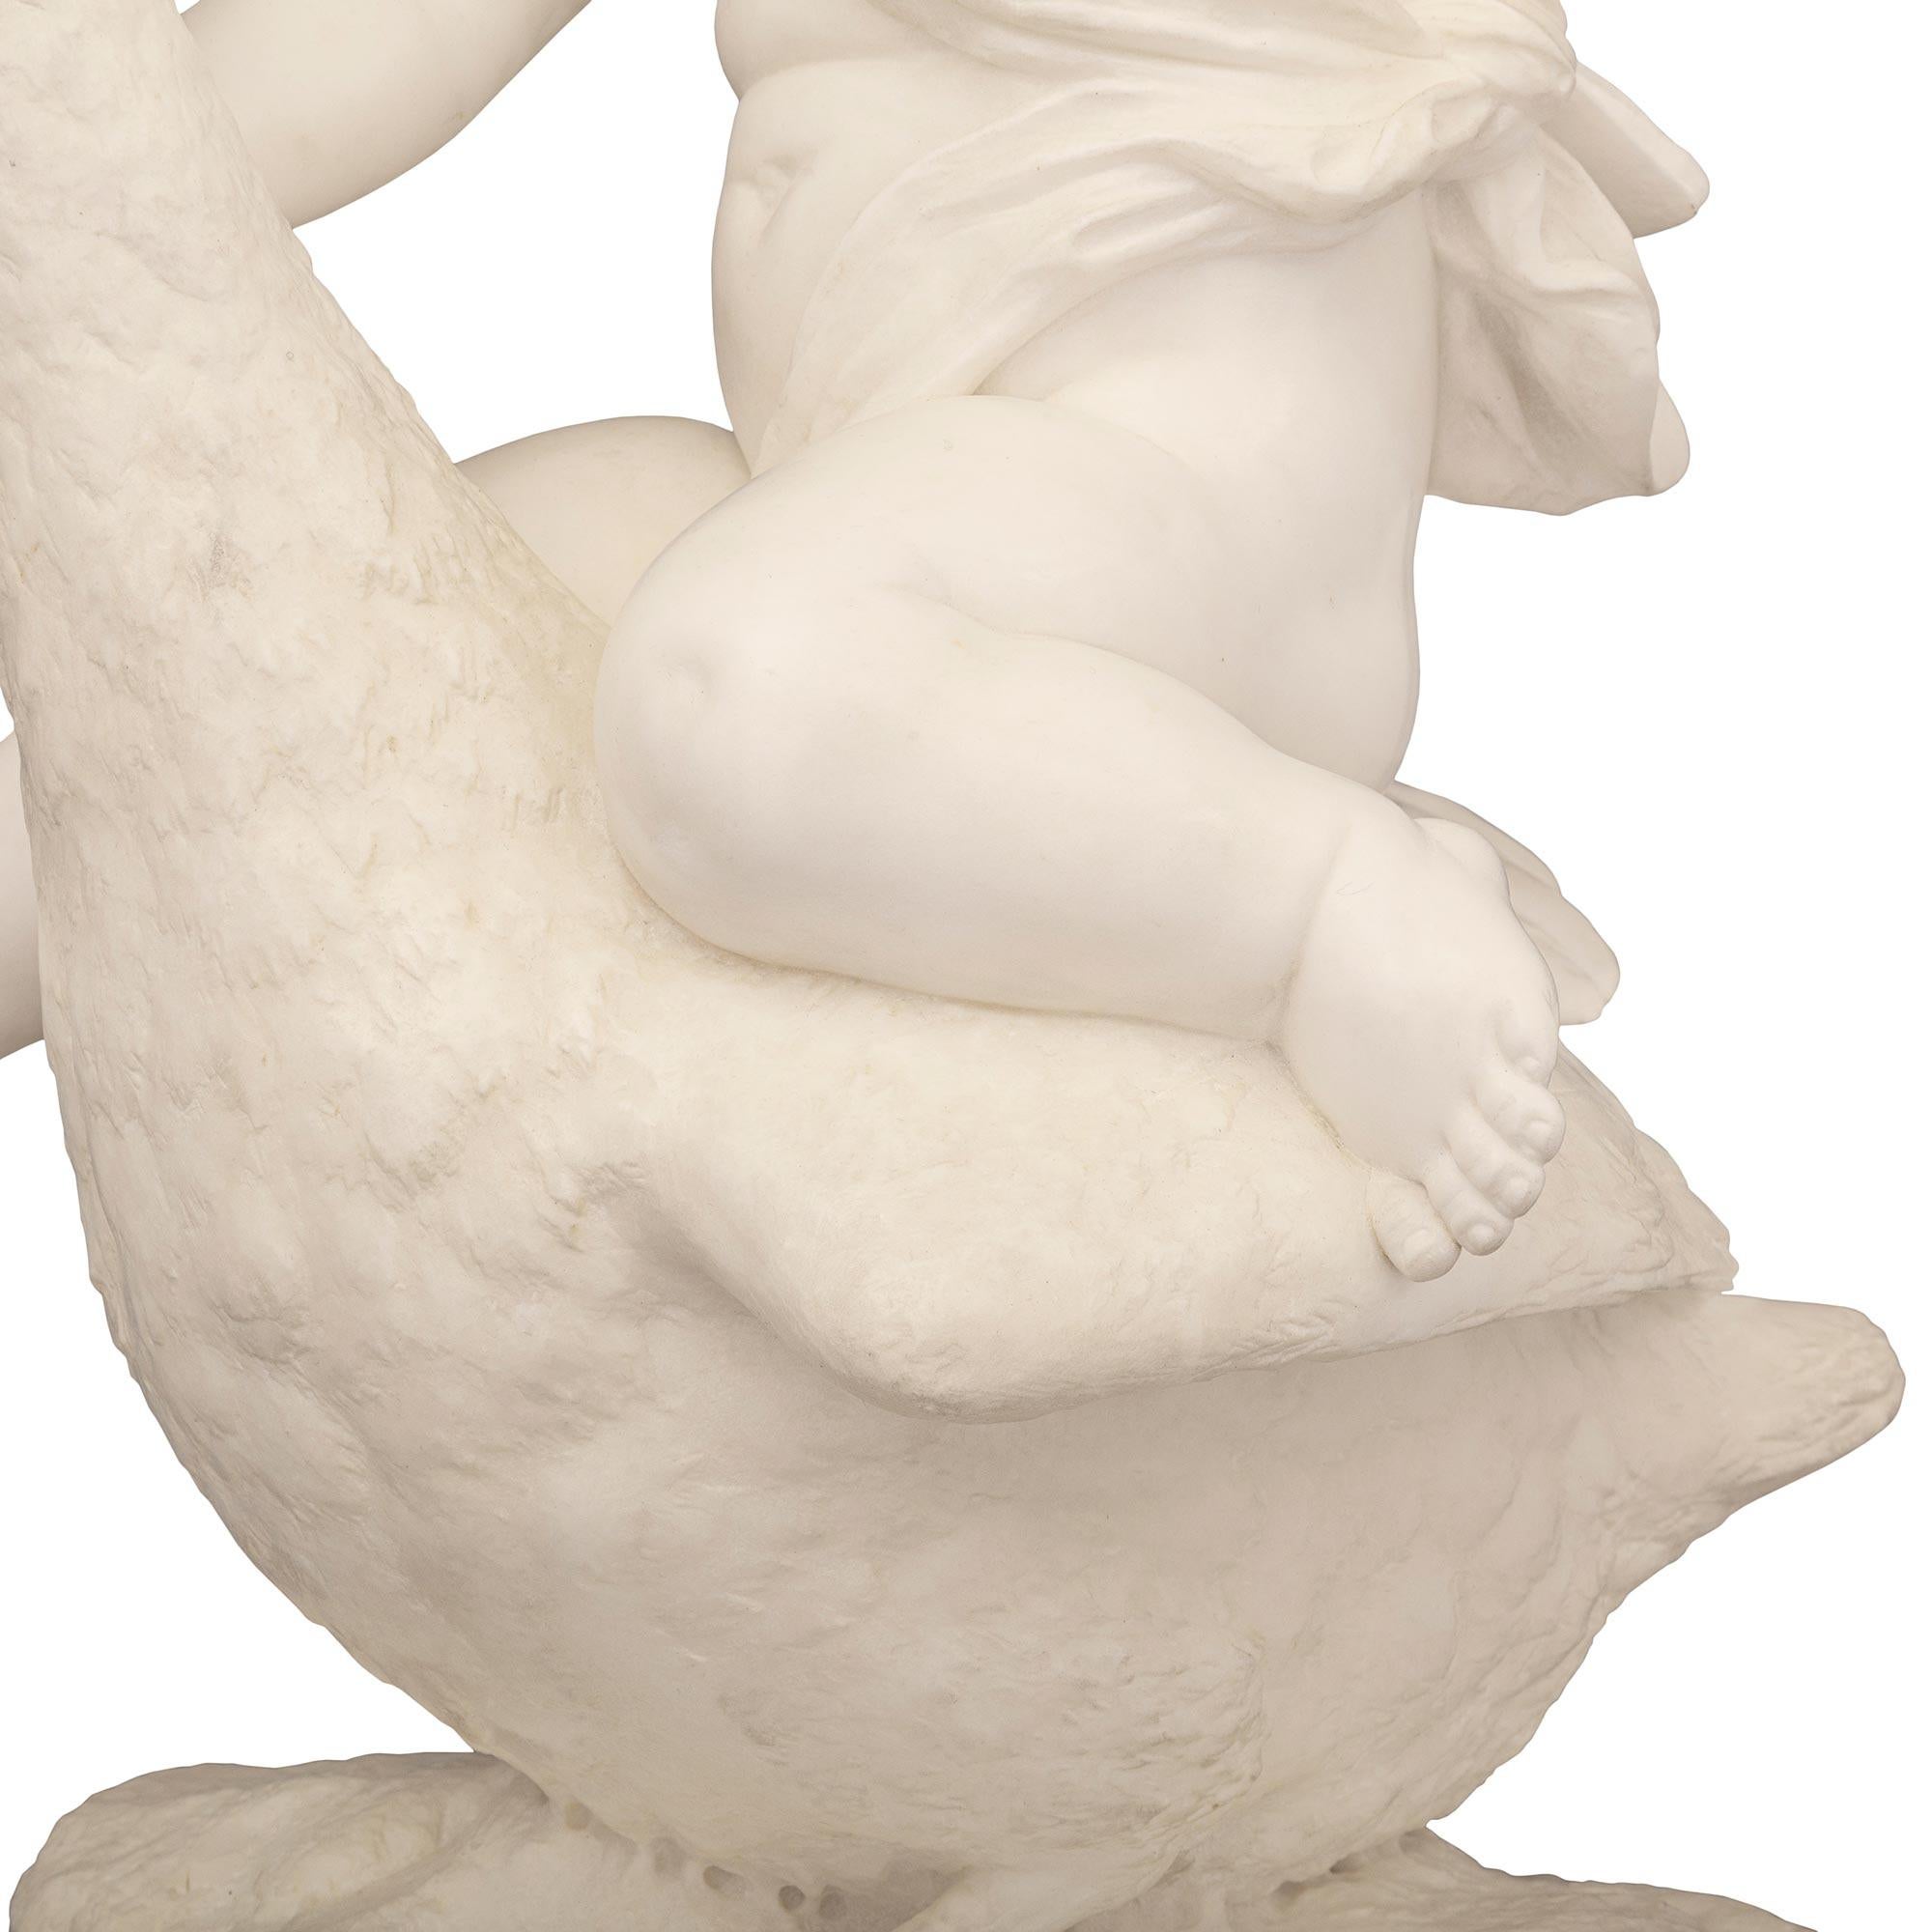 Italian 19th Century White Carrara Marble Statue on Its Original Pedestal For Sale 6